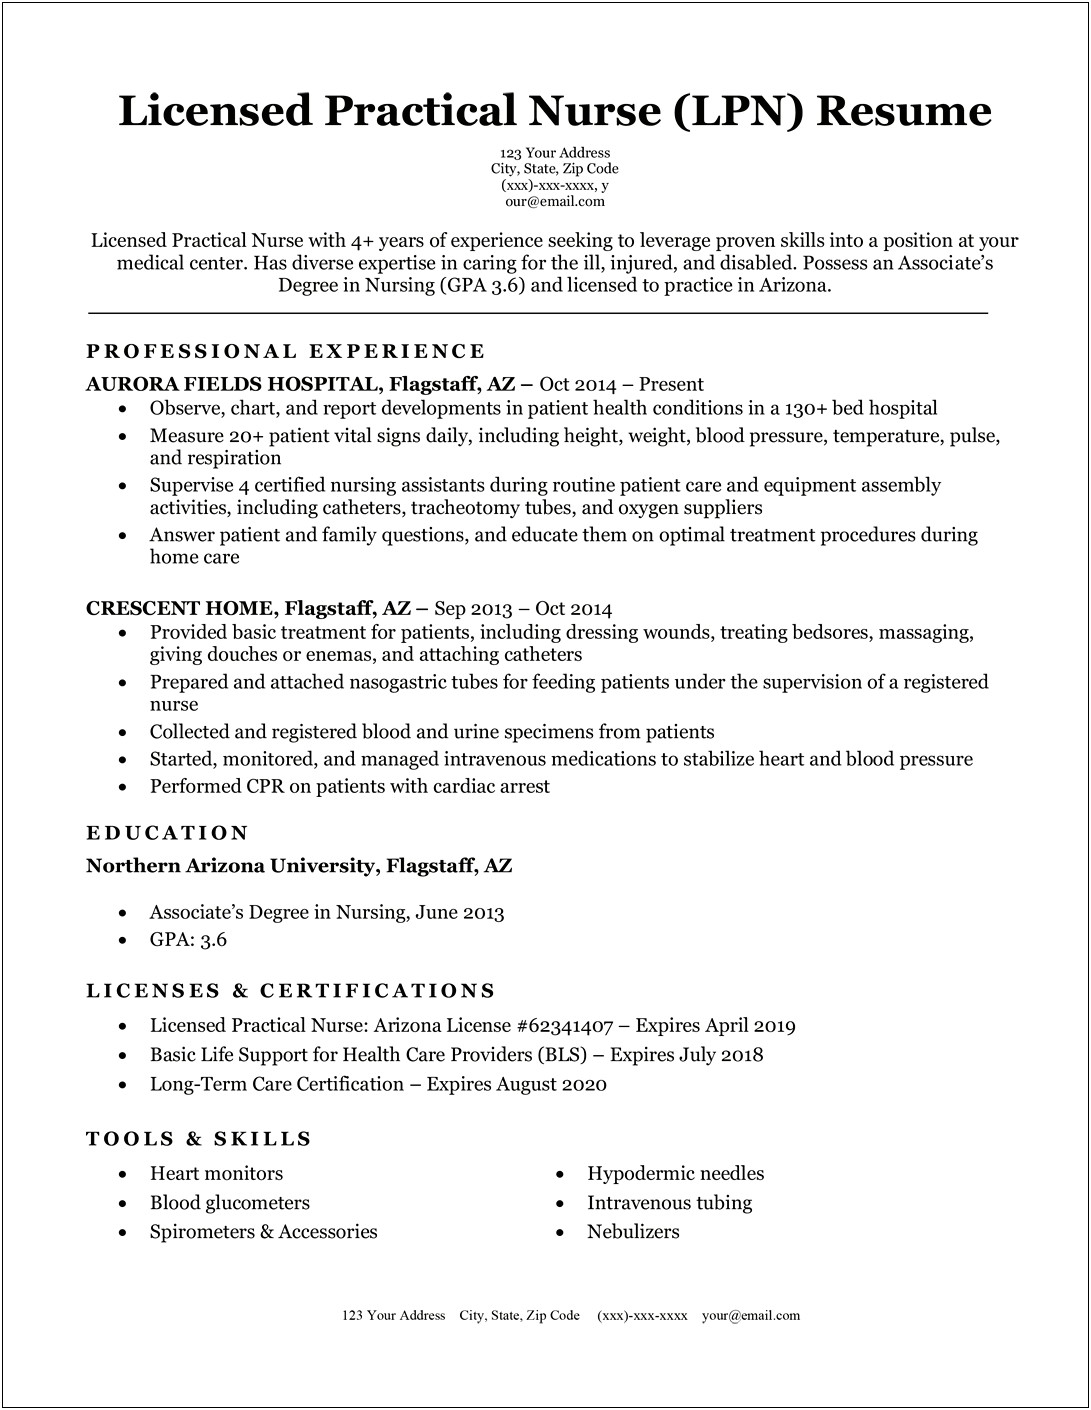 Professional Summary For Resume Registered Nurse